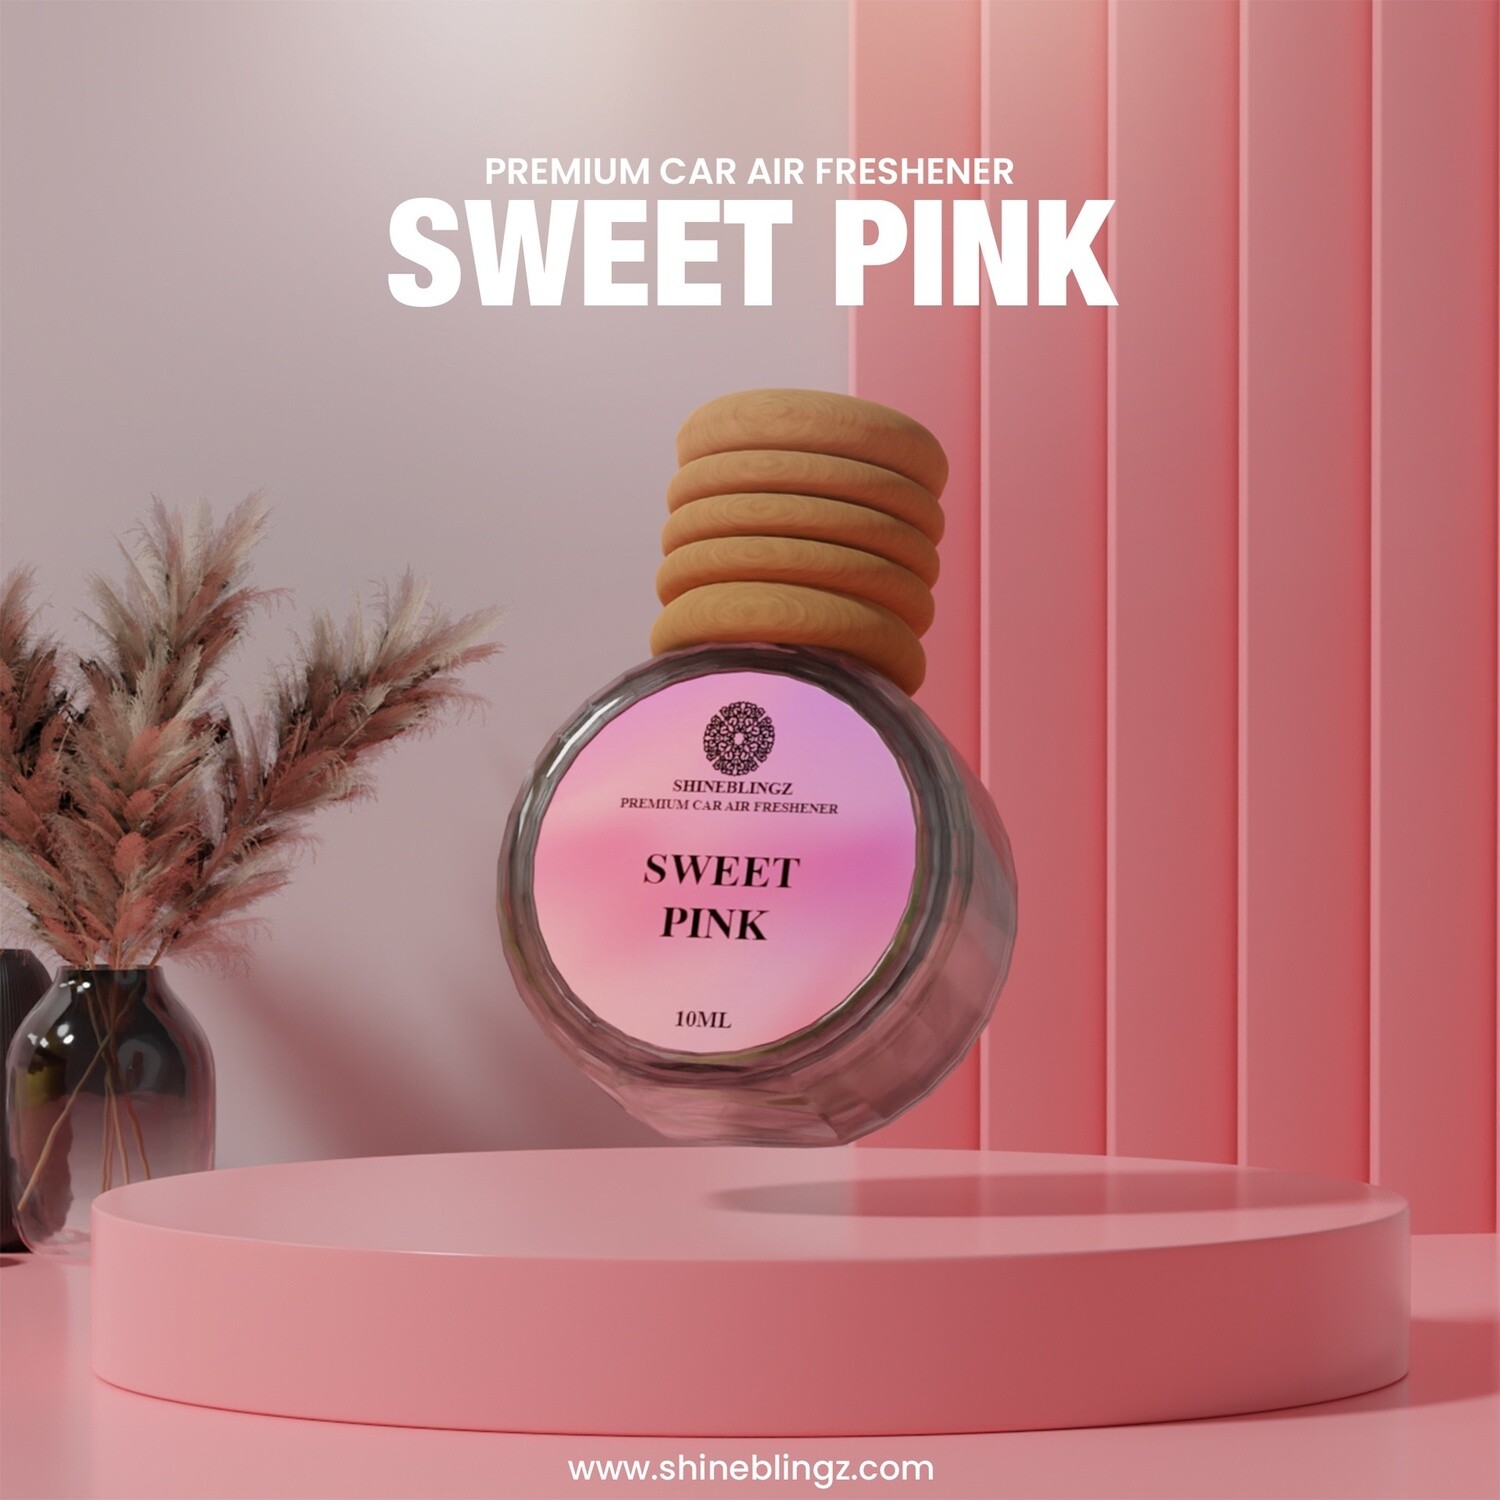 Car Air Freshener - Sweet Pink